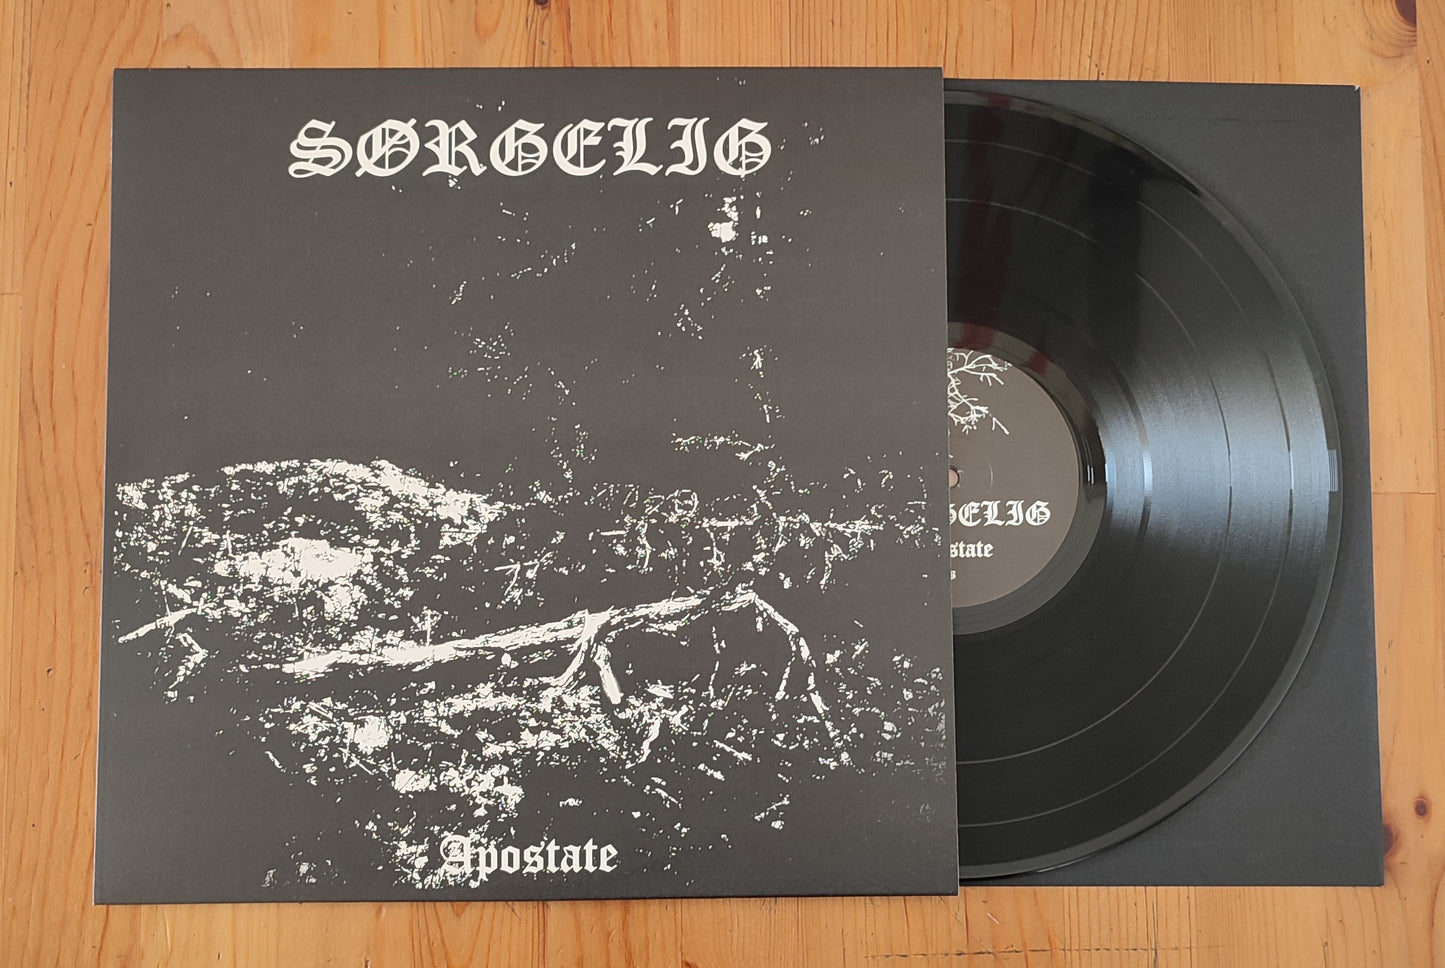 Sørgelig (Gre) "Apostate" - 12" LP ***New in stock***